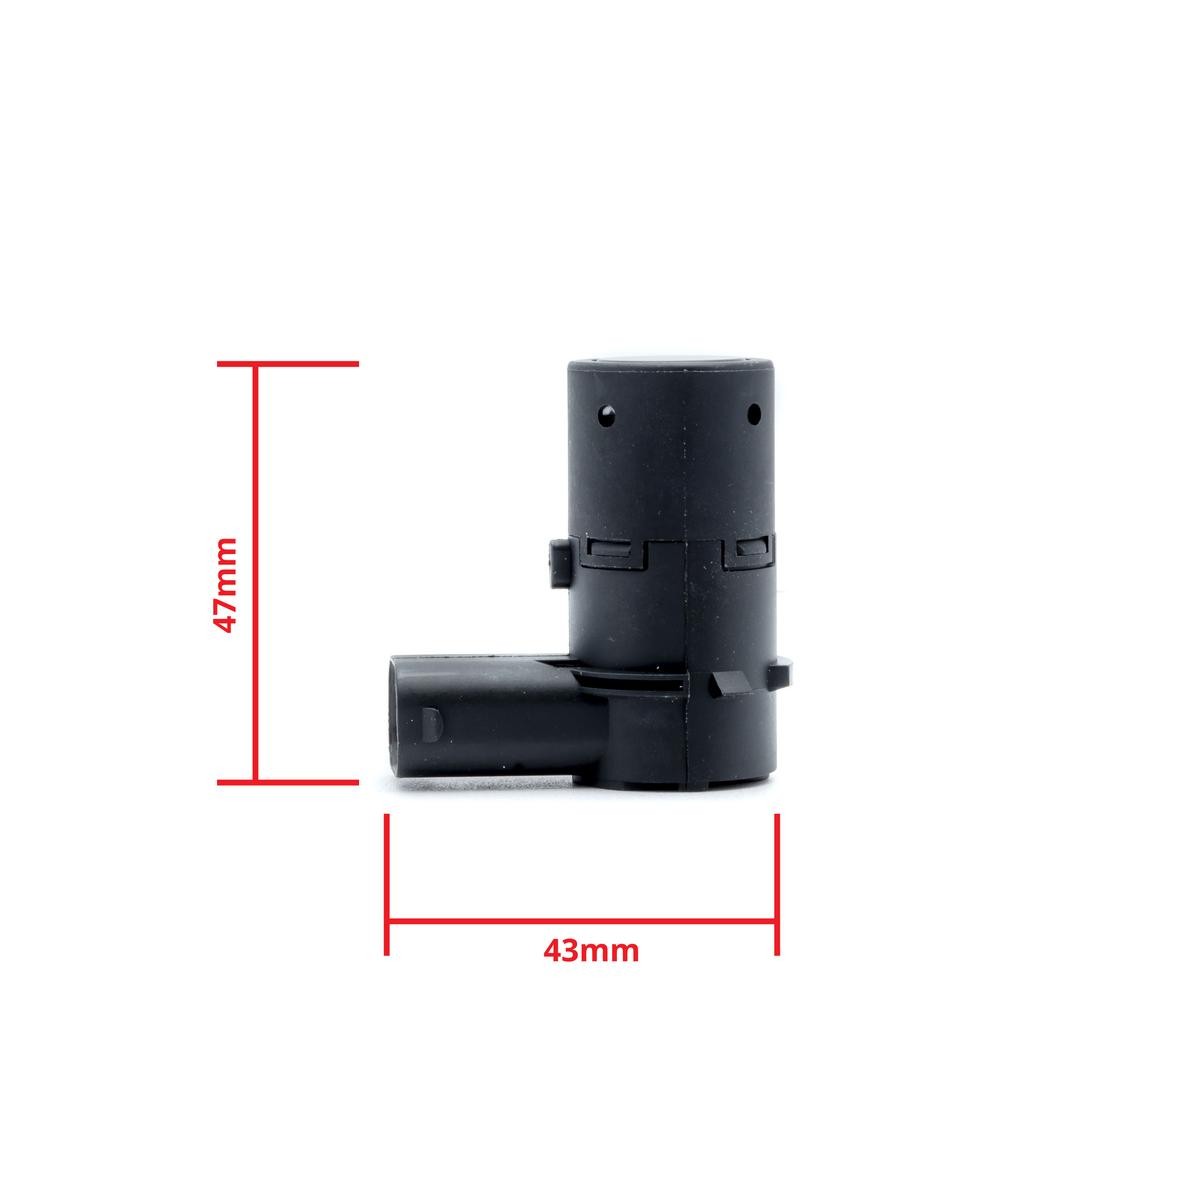 EPPDC61 Park distance control sensors EPPDC61 EINPARTS black, Ultrasonic Sensor